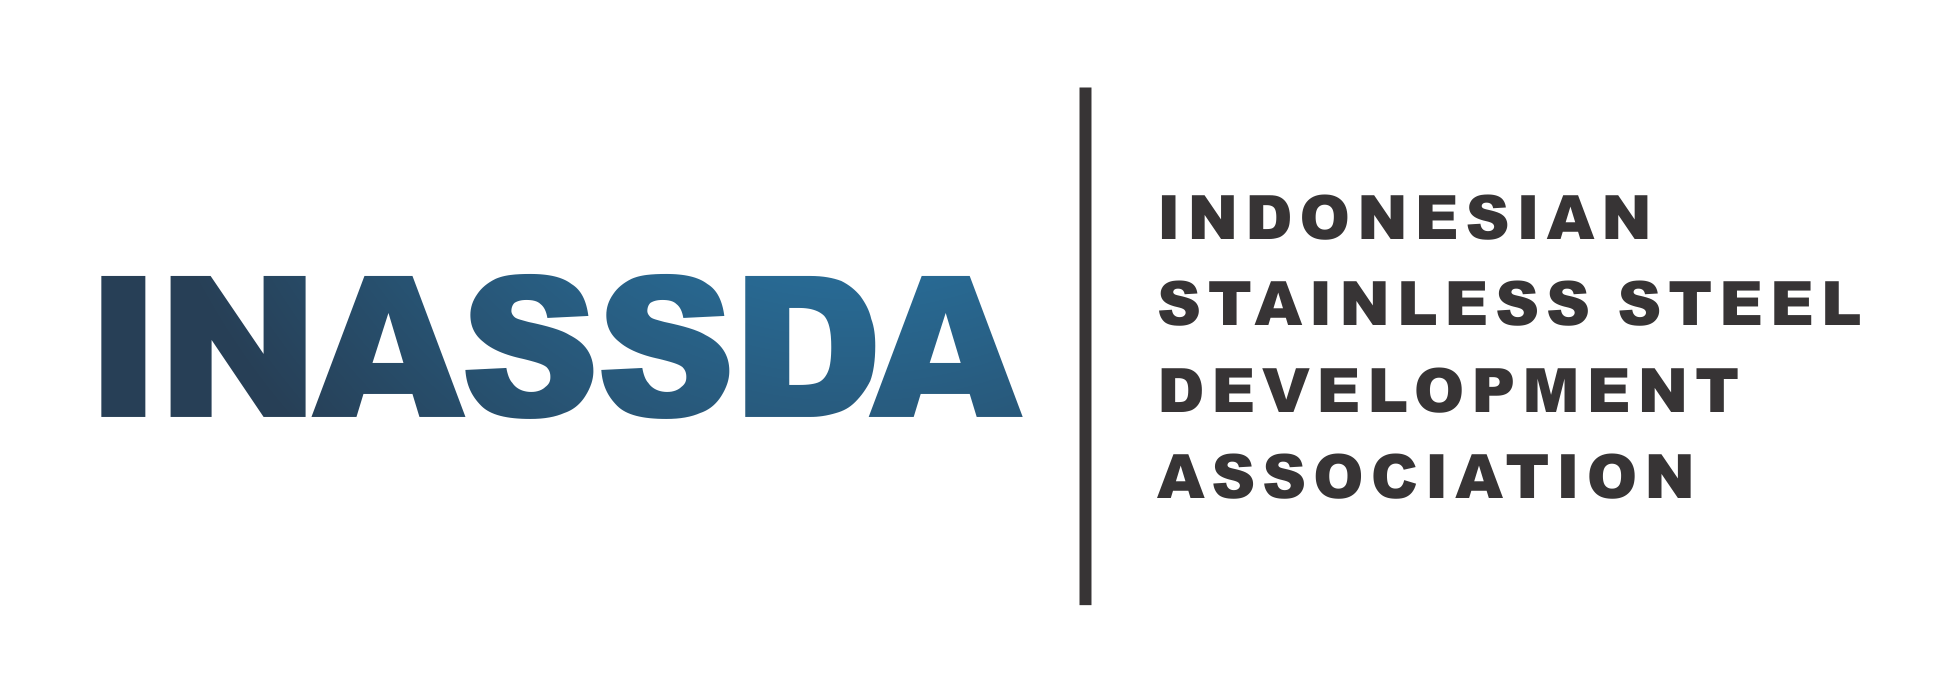 Supporting Association INASSDA